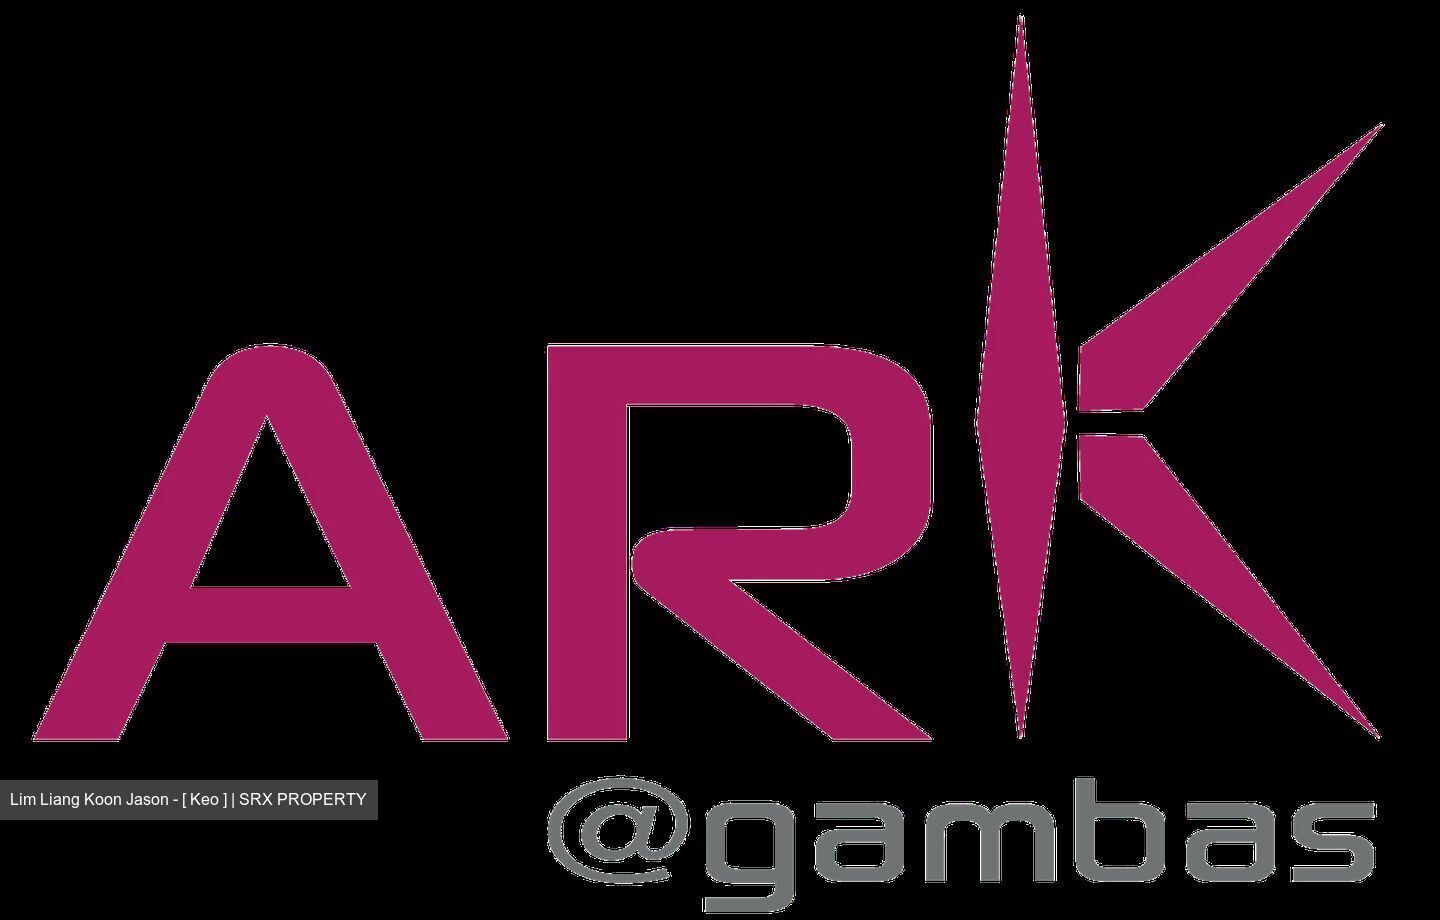 Ark@gambas (D27), Factory #301129671